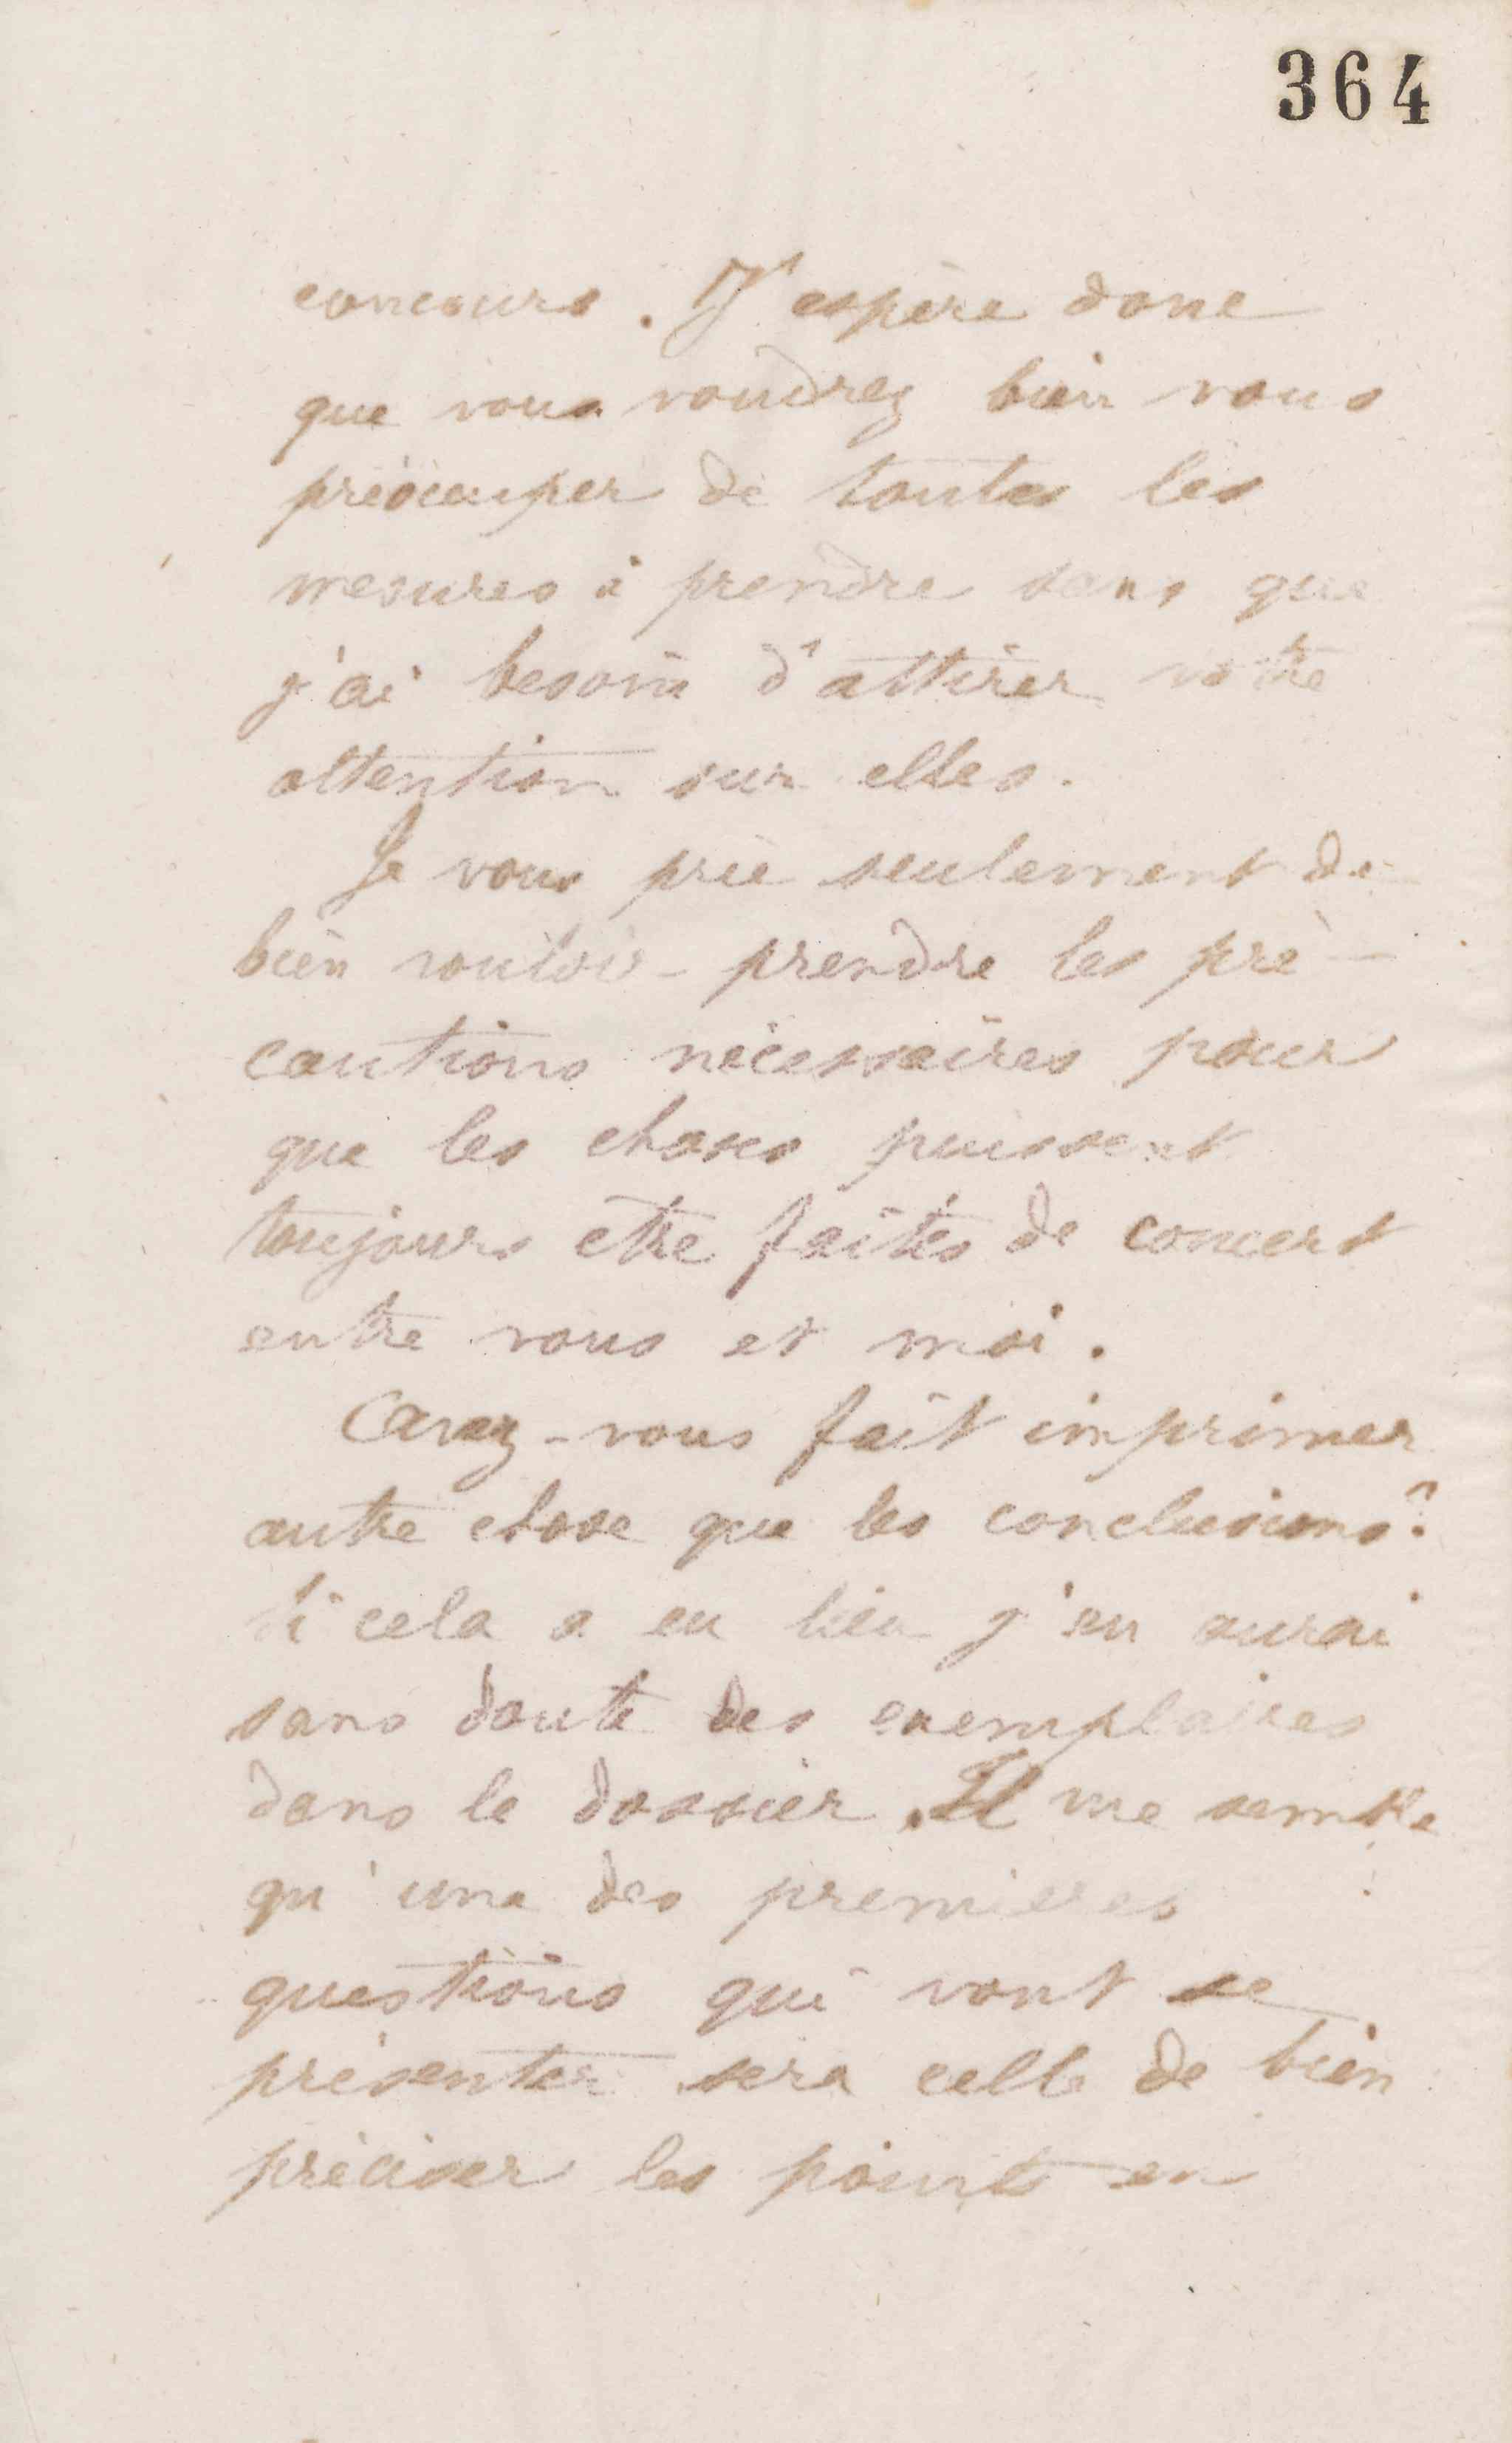 Jean-Baptiste André Godin à Alexandre Tisserant, 2 juillet 1873